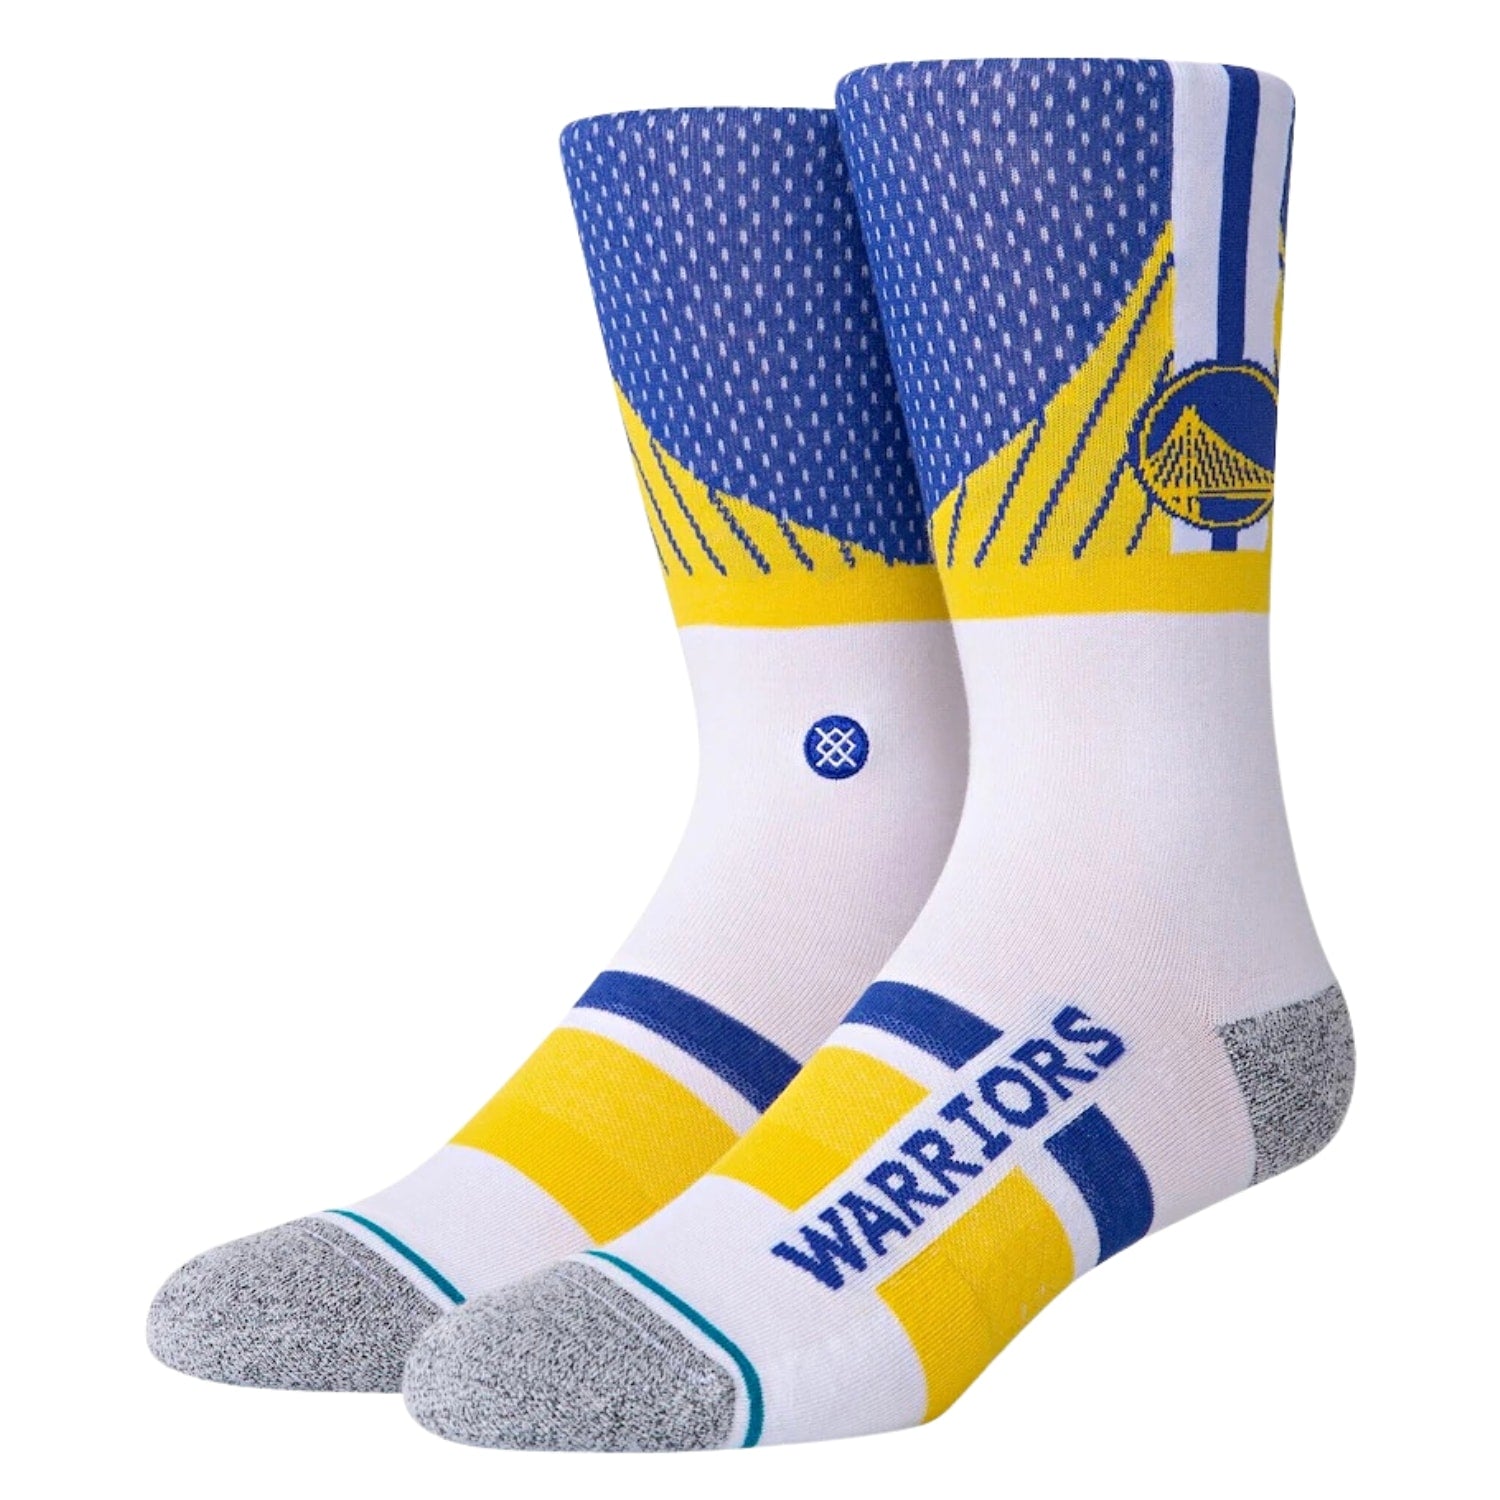 Stance Warriors Shortcut 2 Socks - Blue - Mens Crew Length Socks by Stance L (UK8-12.5)